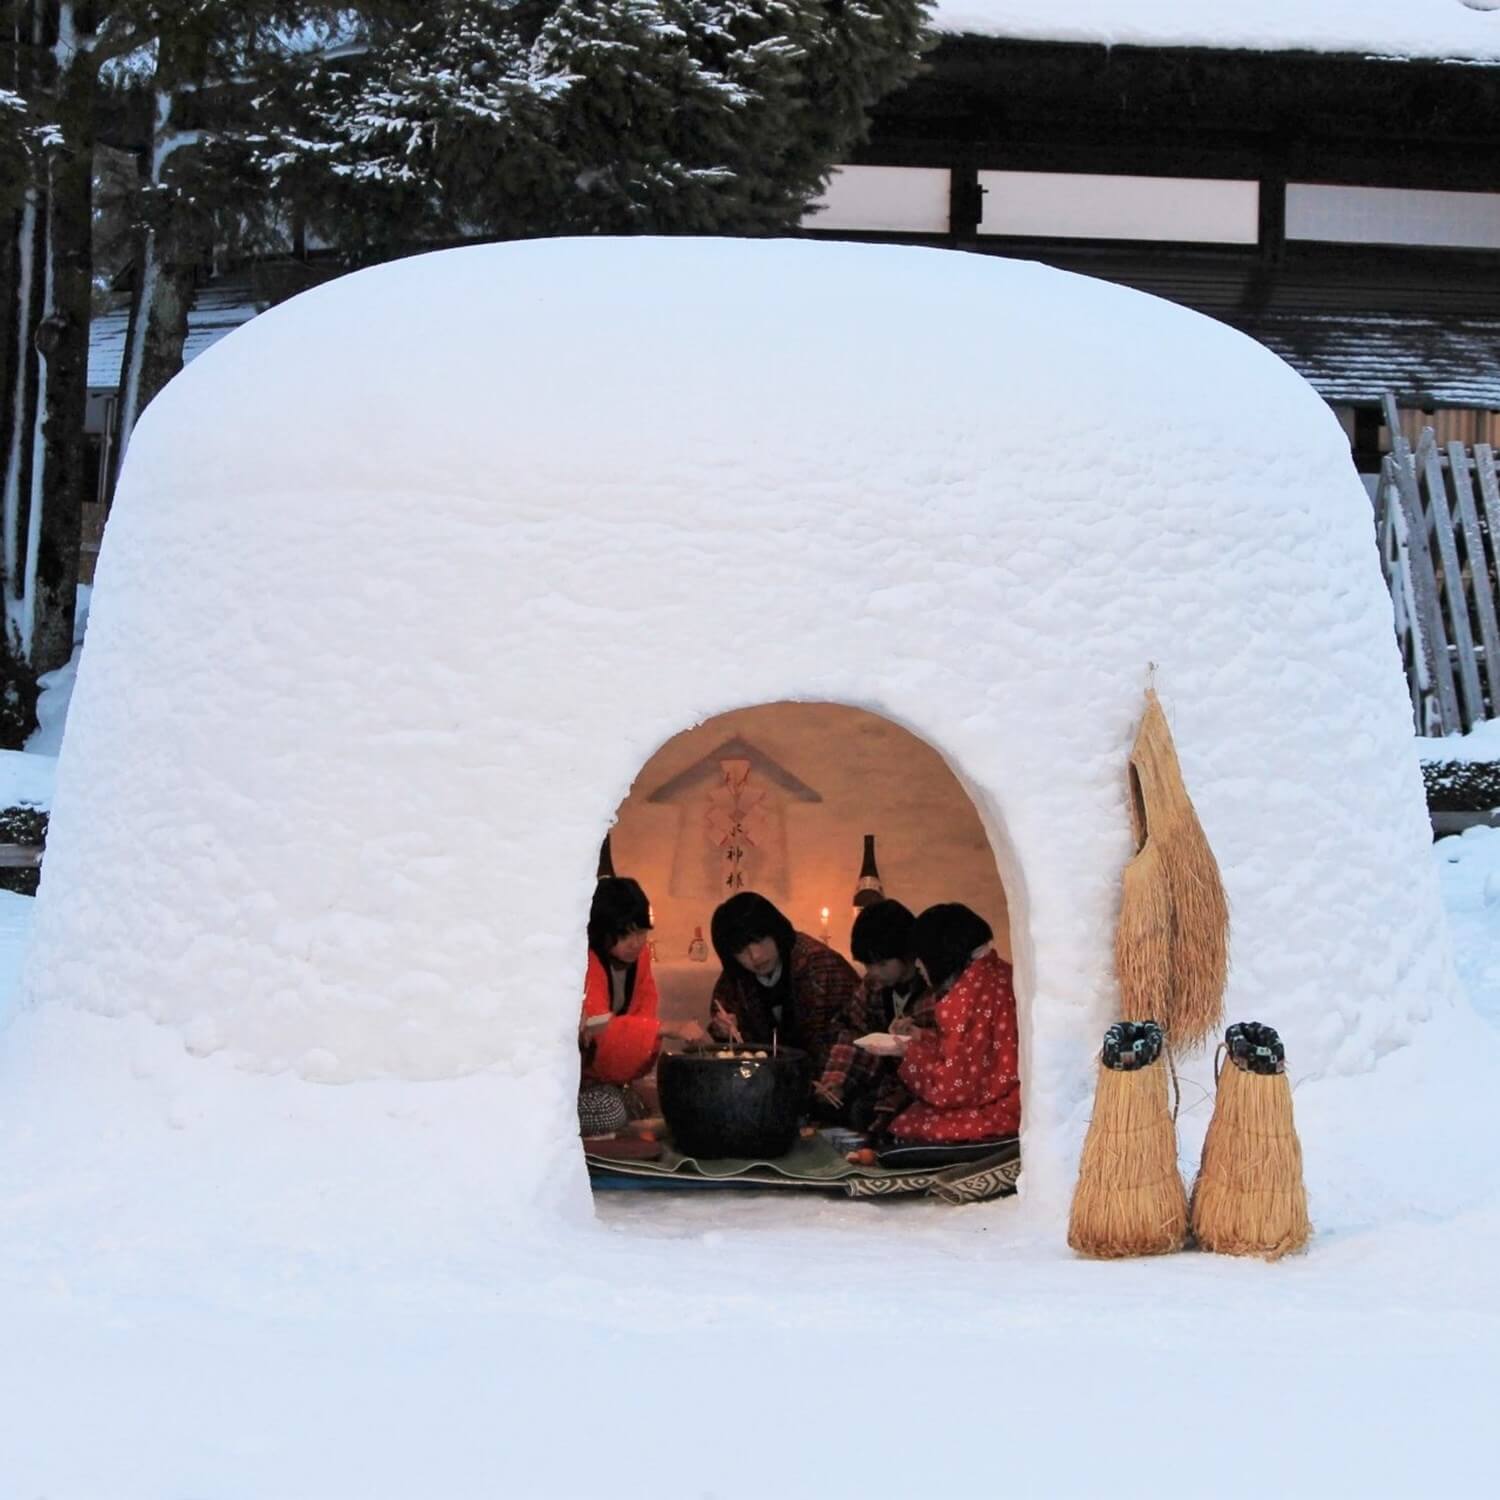 "Kamakura" at Yokote Snow Festival, Yokote City, Akita Prefecture 2